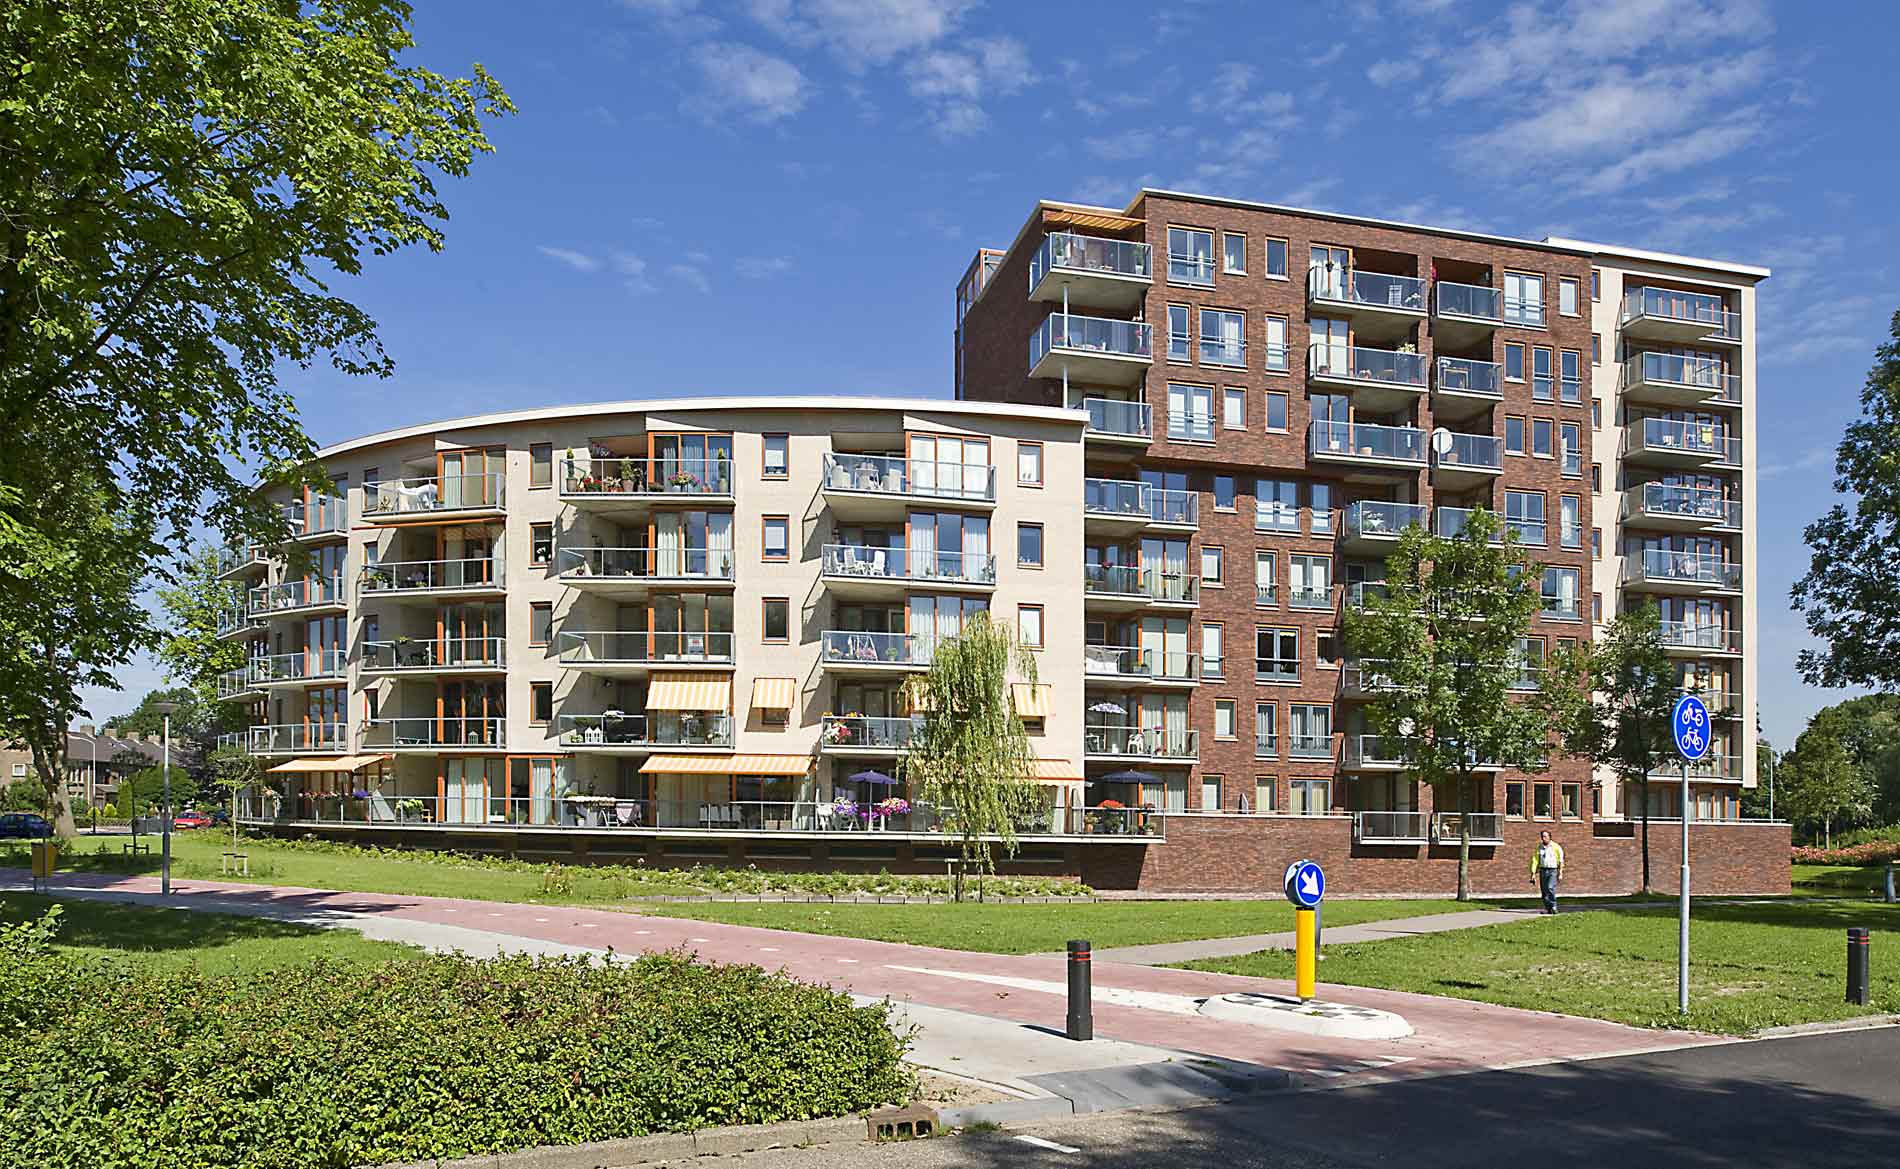 stadsvernieuwing herstructurering Heemskerk Waterrijck appartementen woningen park BBHD architecten